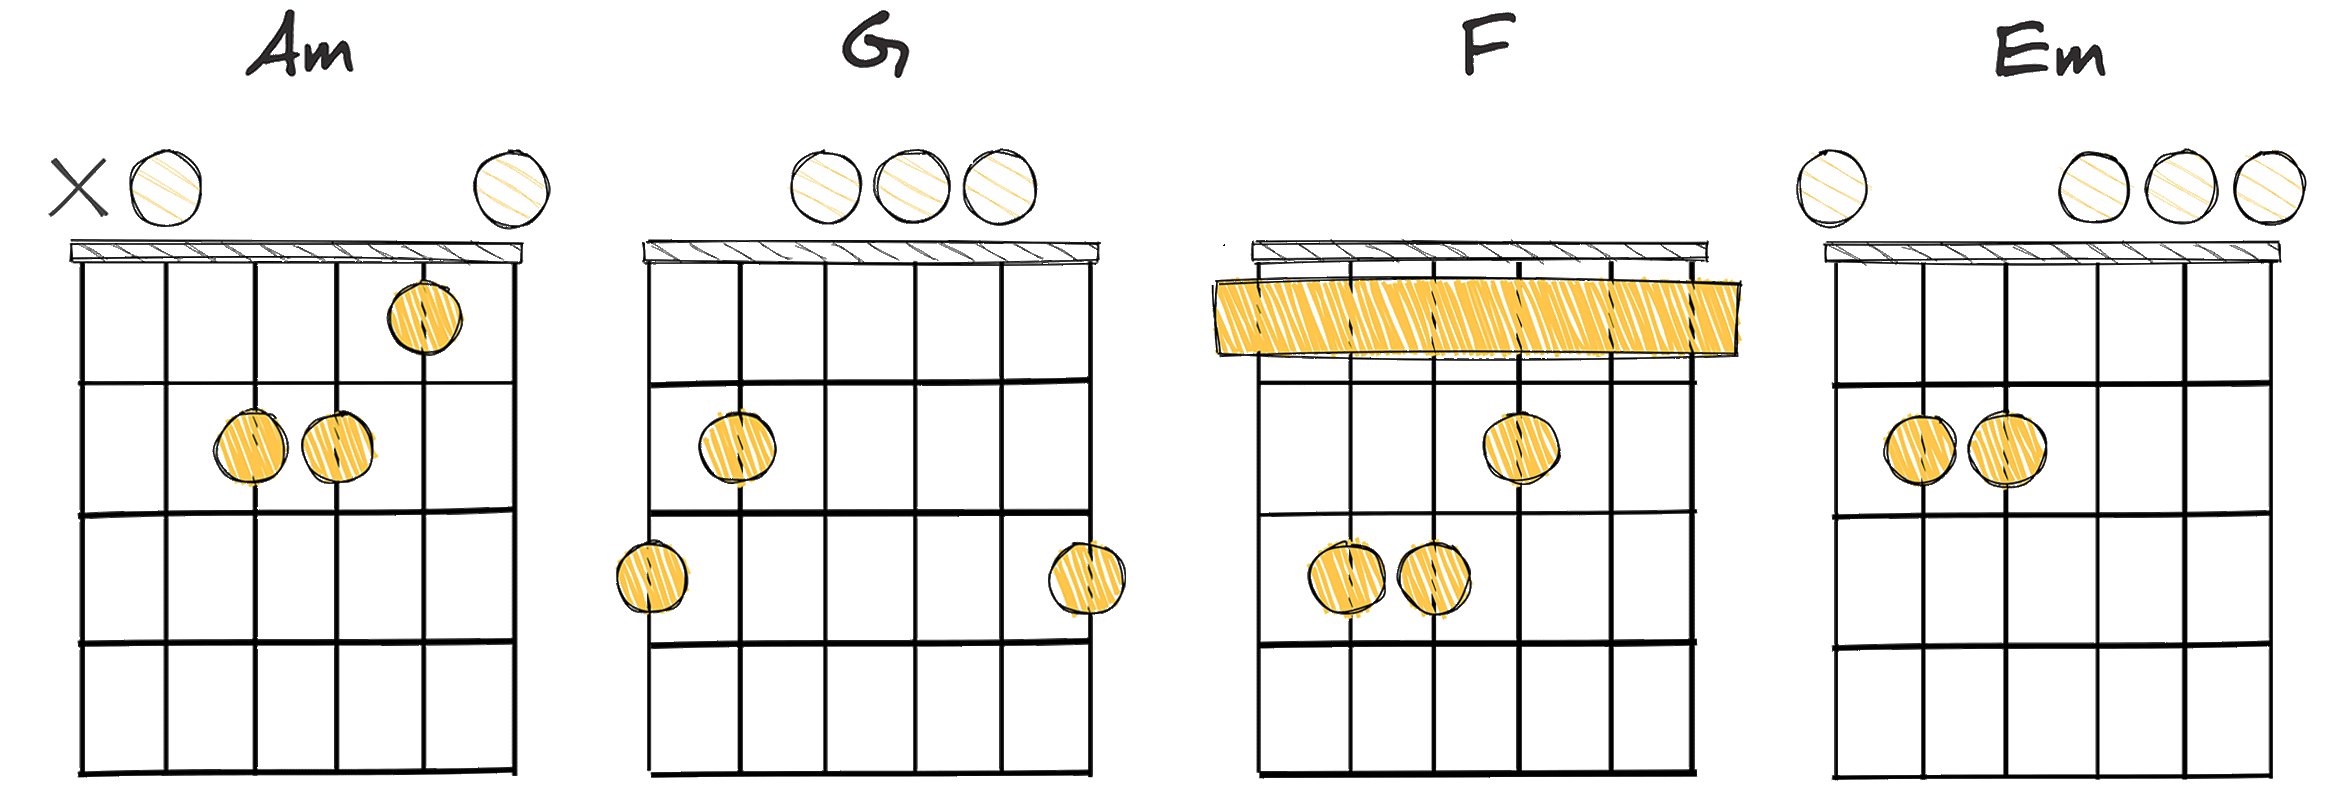 vi - V - IV - iii (6 - 5 - 4 - 3) chords diagram